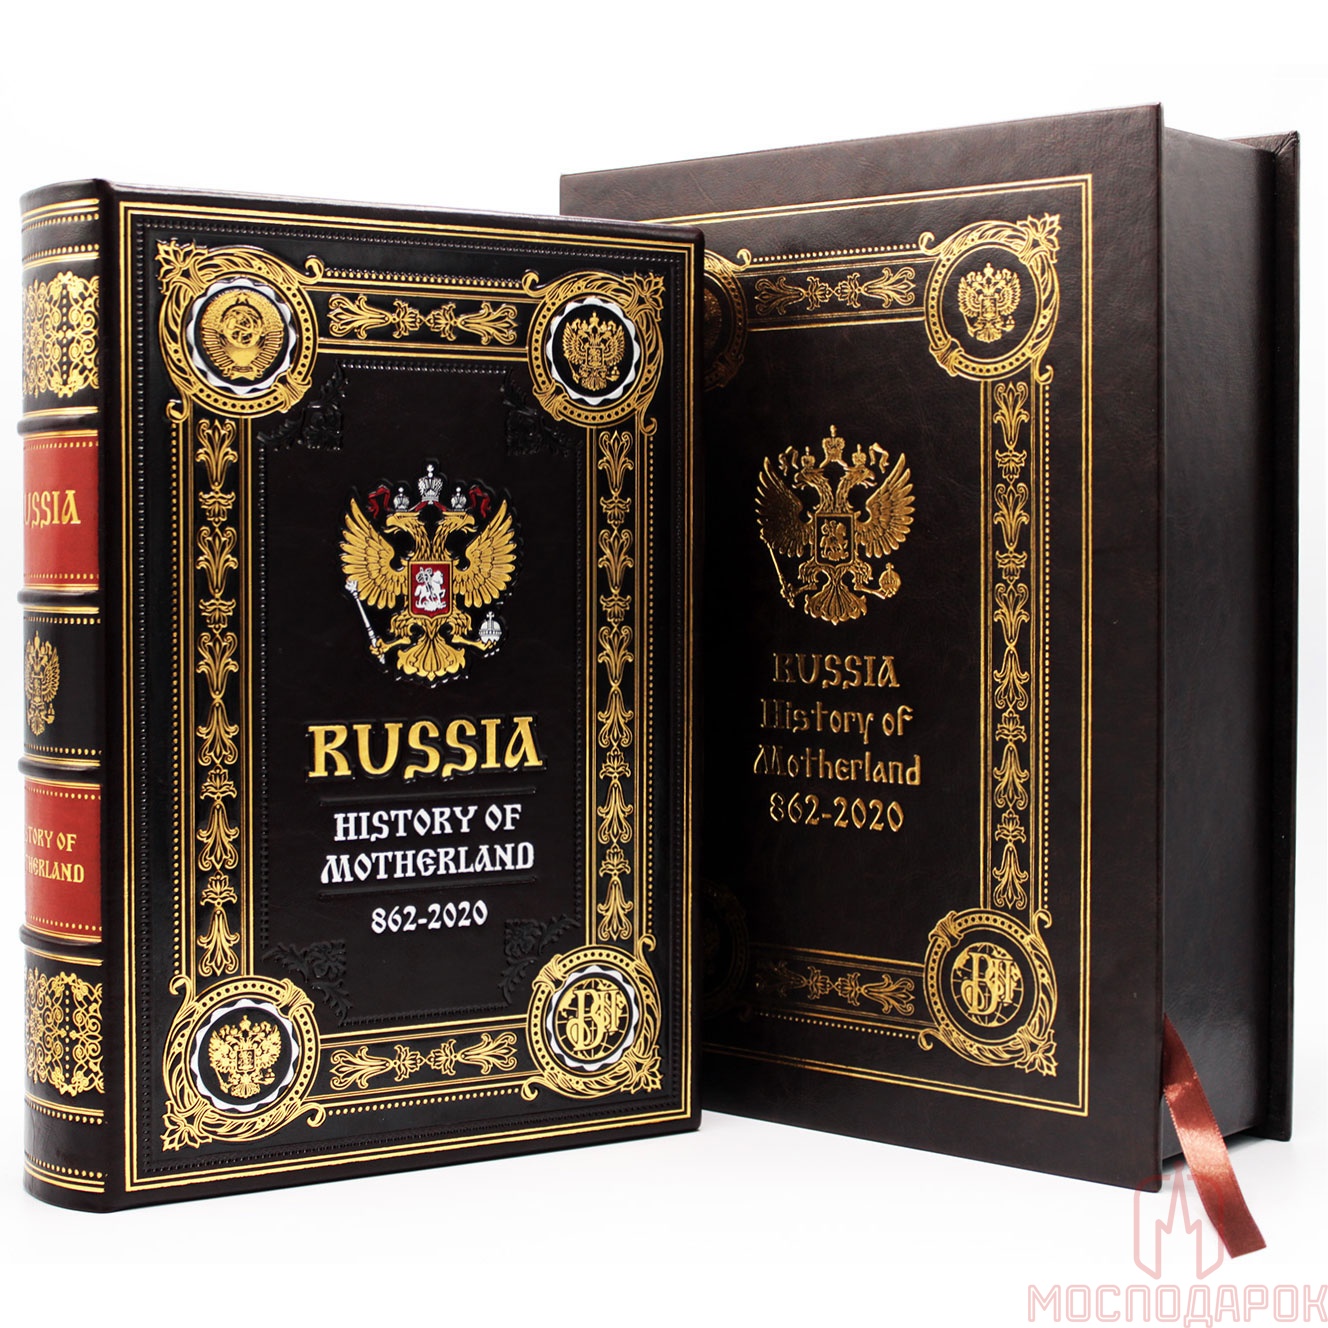 Подарочная книга "Russia" History of Motherland 862-2020 - артикул: S10524 | Мосподарок 